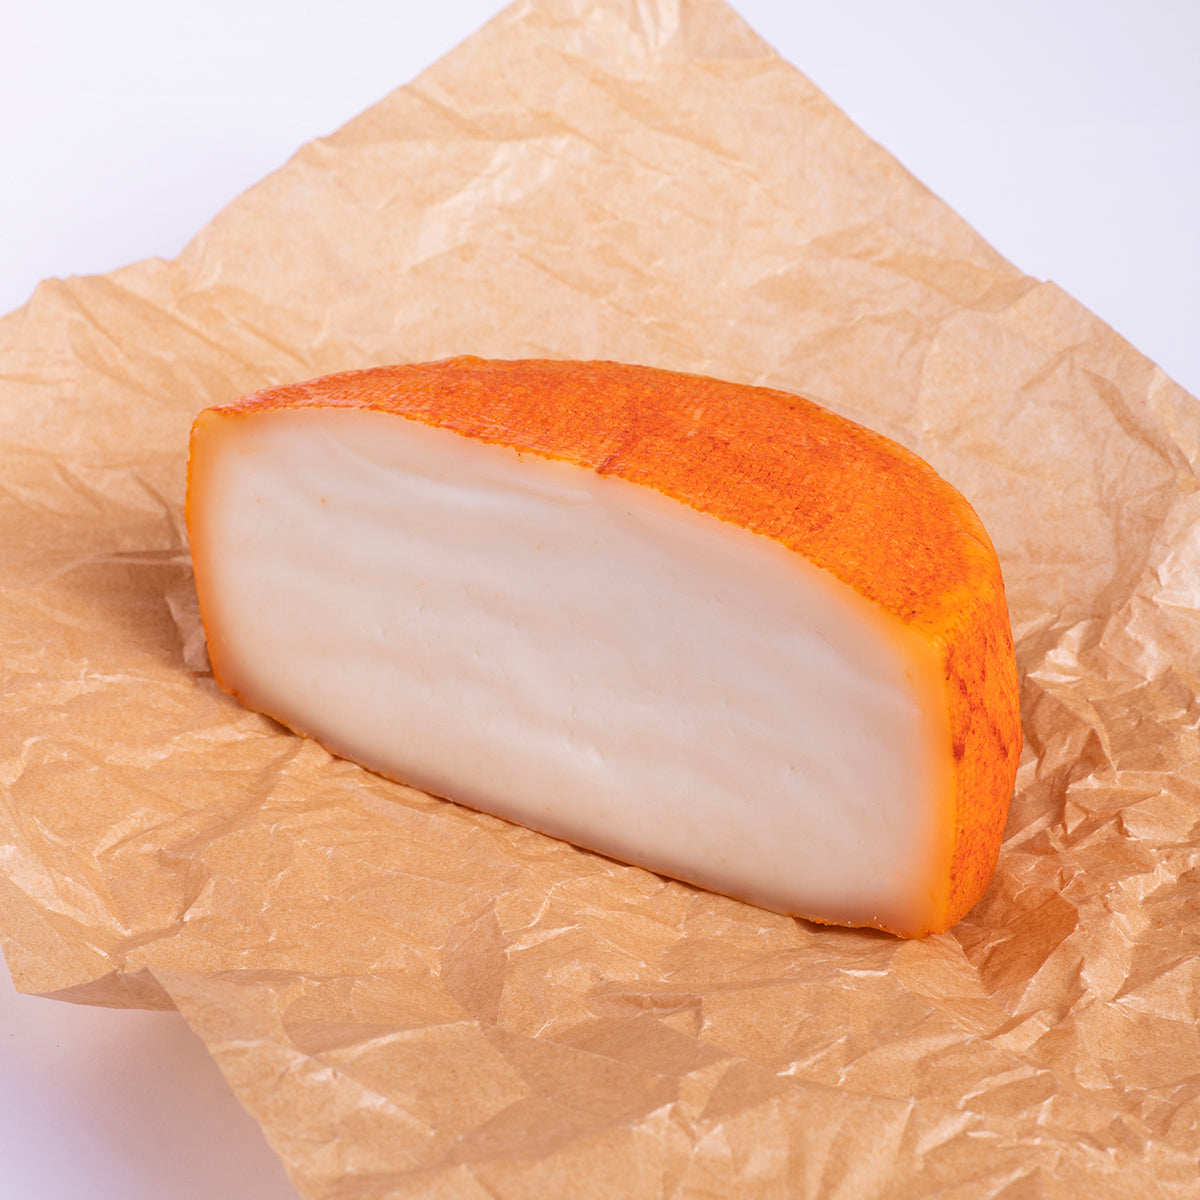 medio queso puro de cabra con corteza de pimenton e interior blanco, sobre papel alimentario